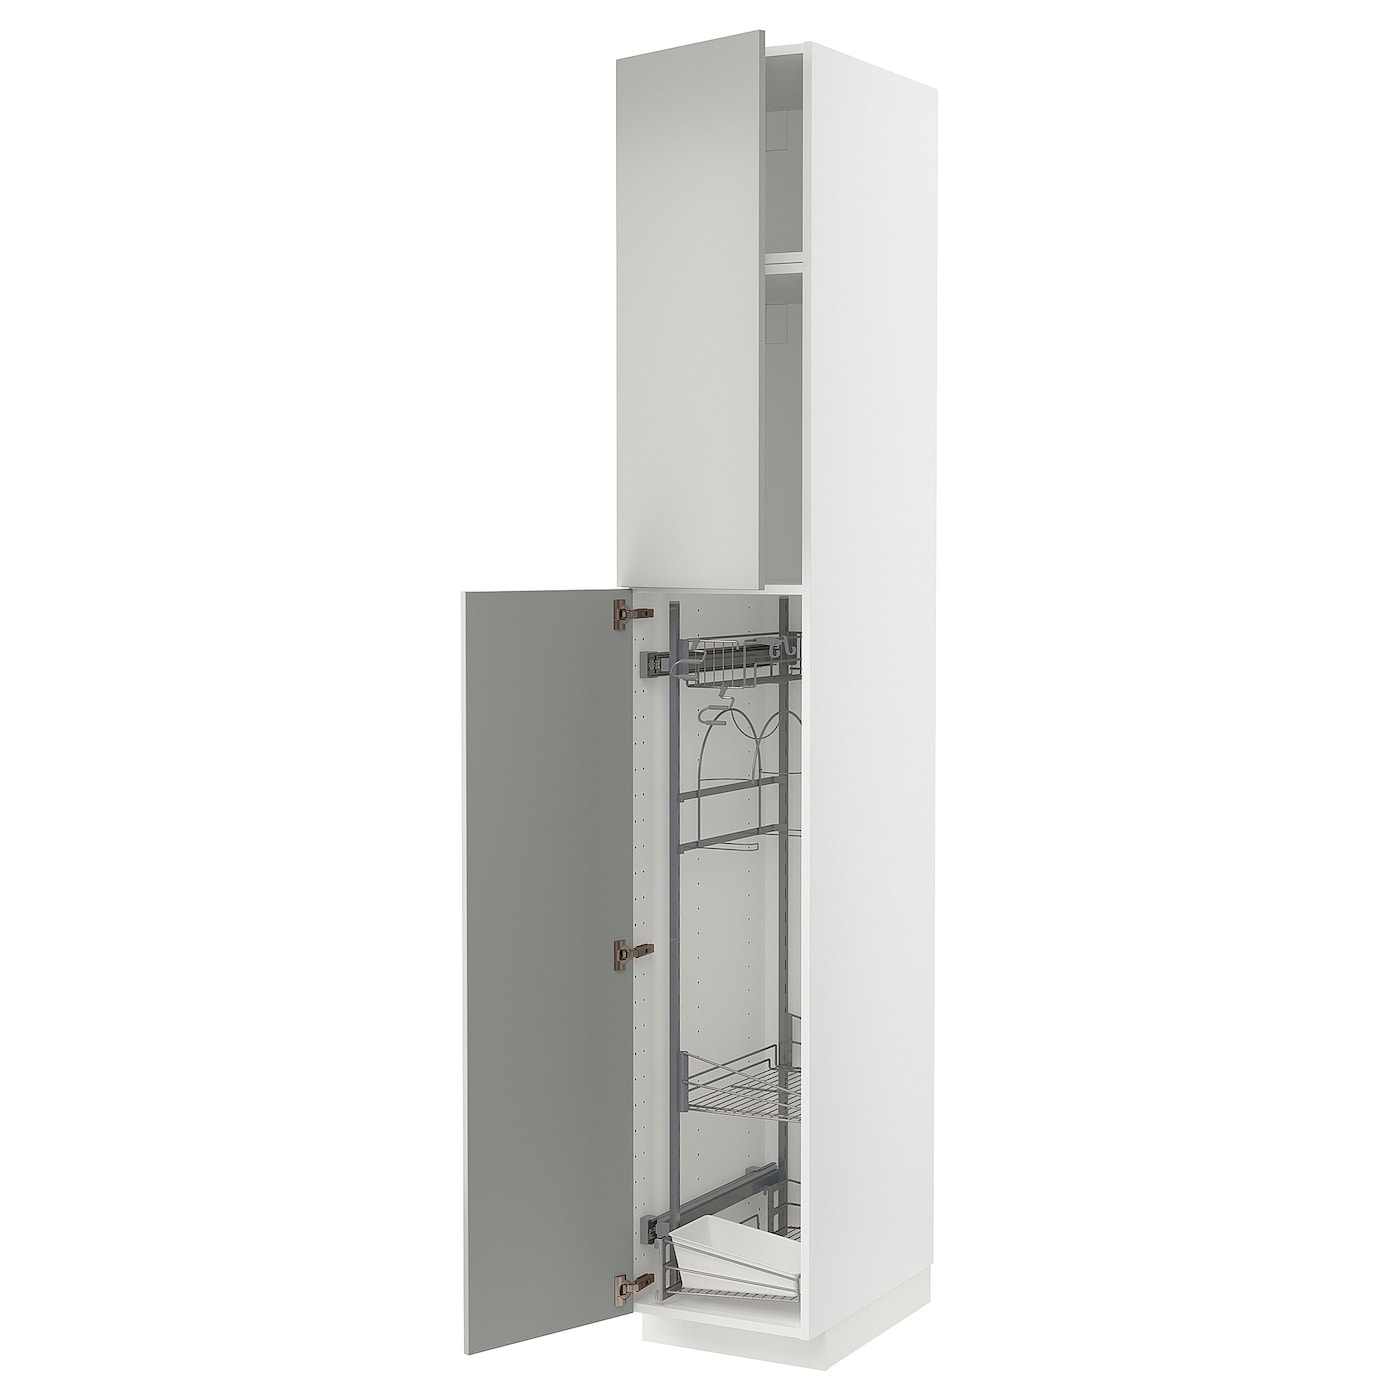 Высокий кухонный шкаф/бытовой - IKEA METOD/МЕТОД ИКЕА, 240х60х40 см, белый/серый